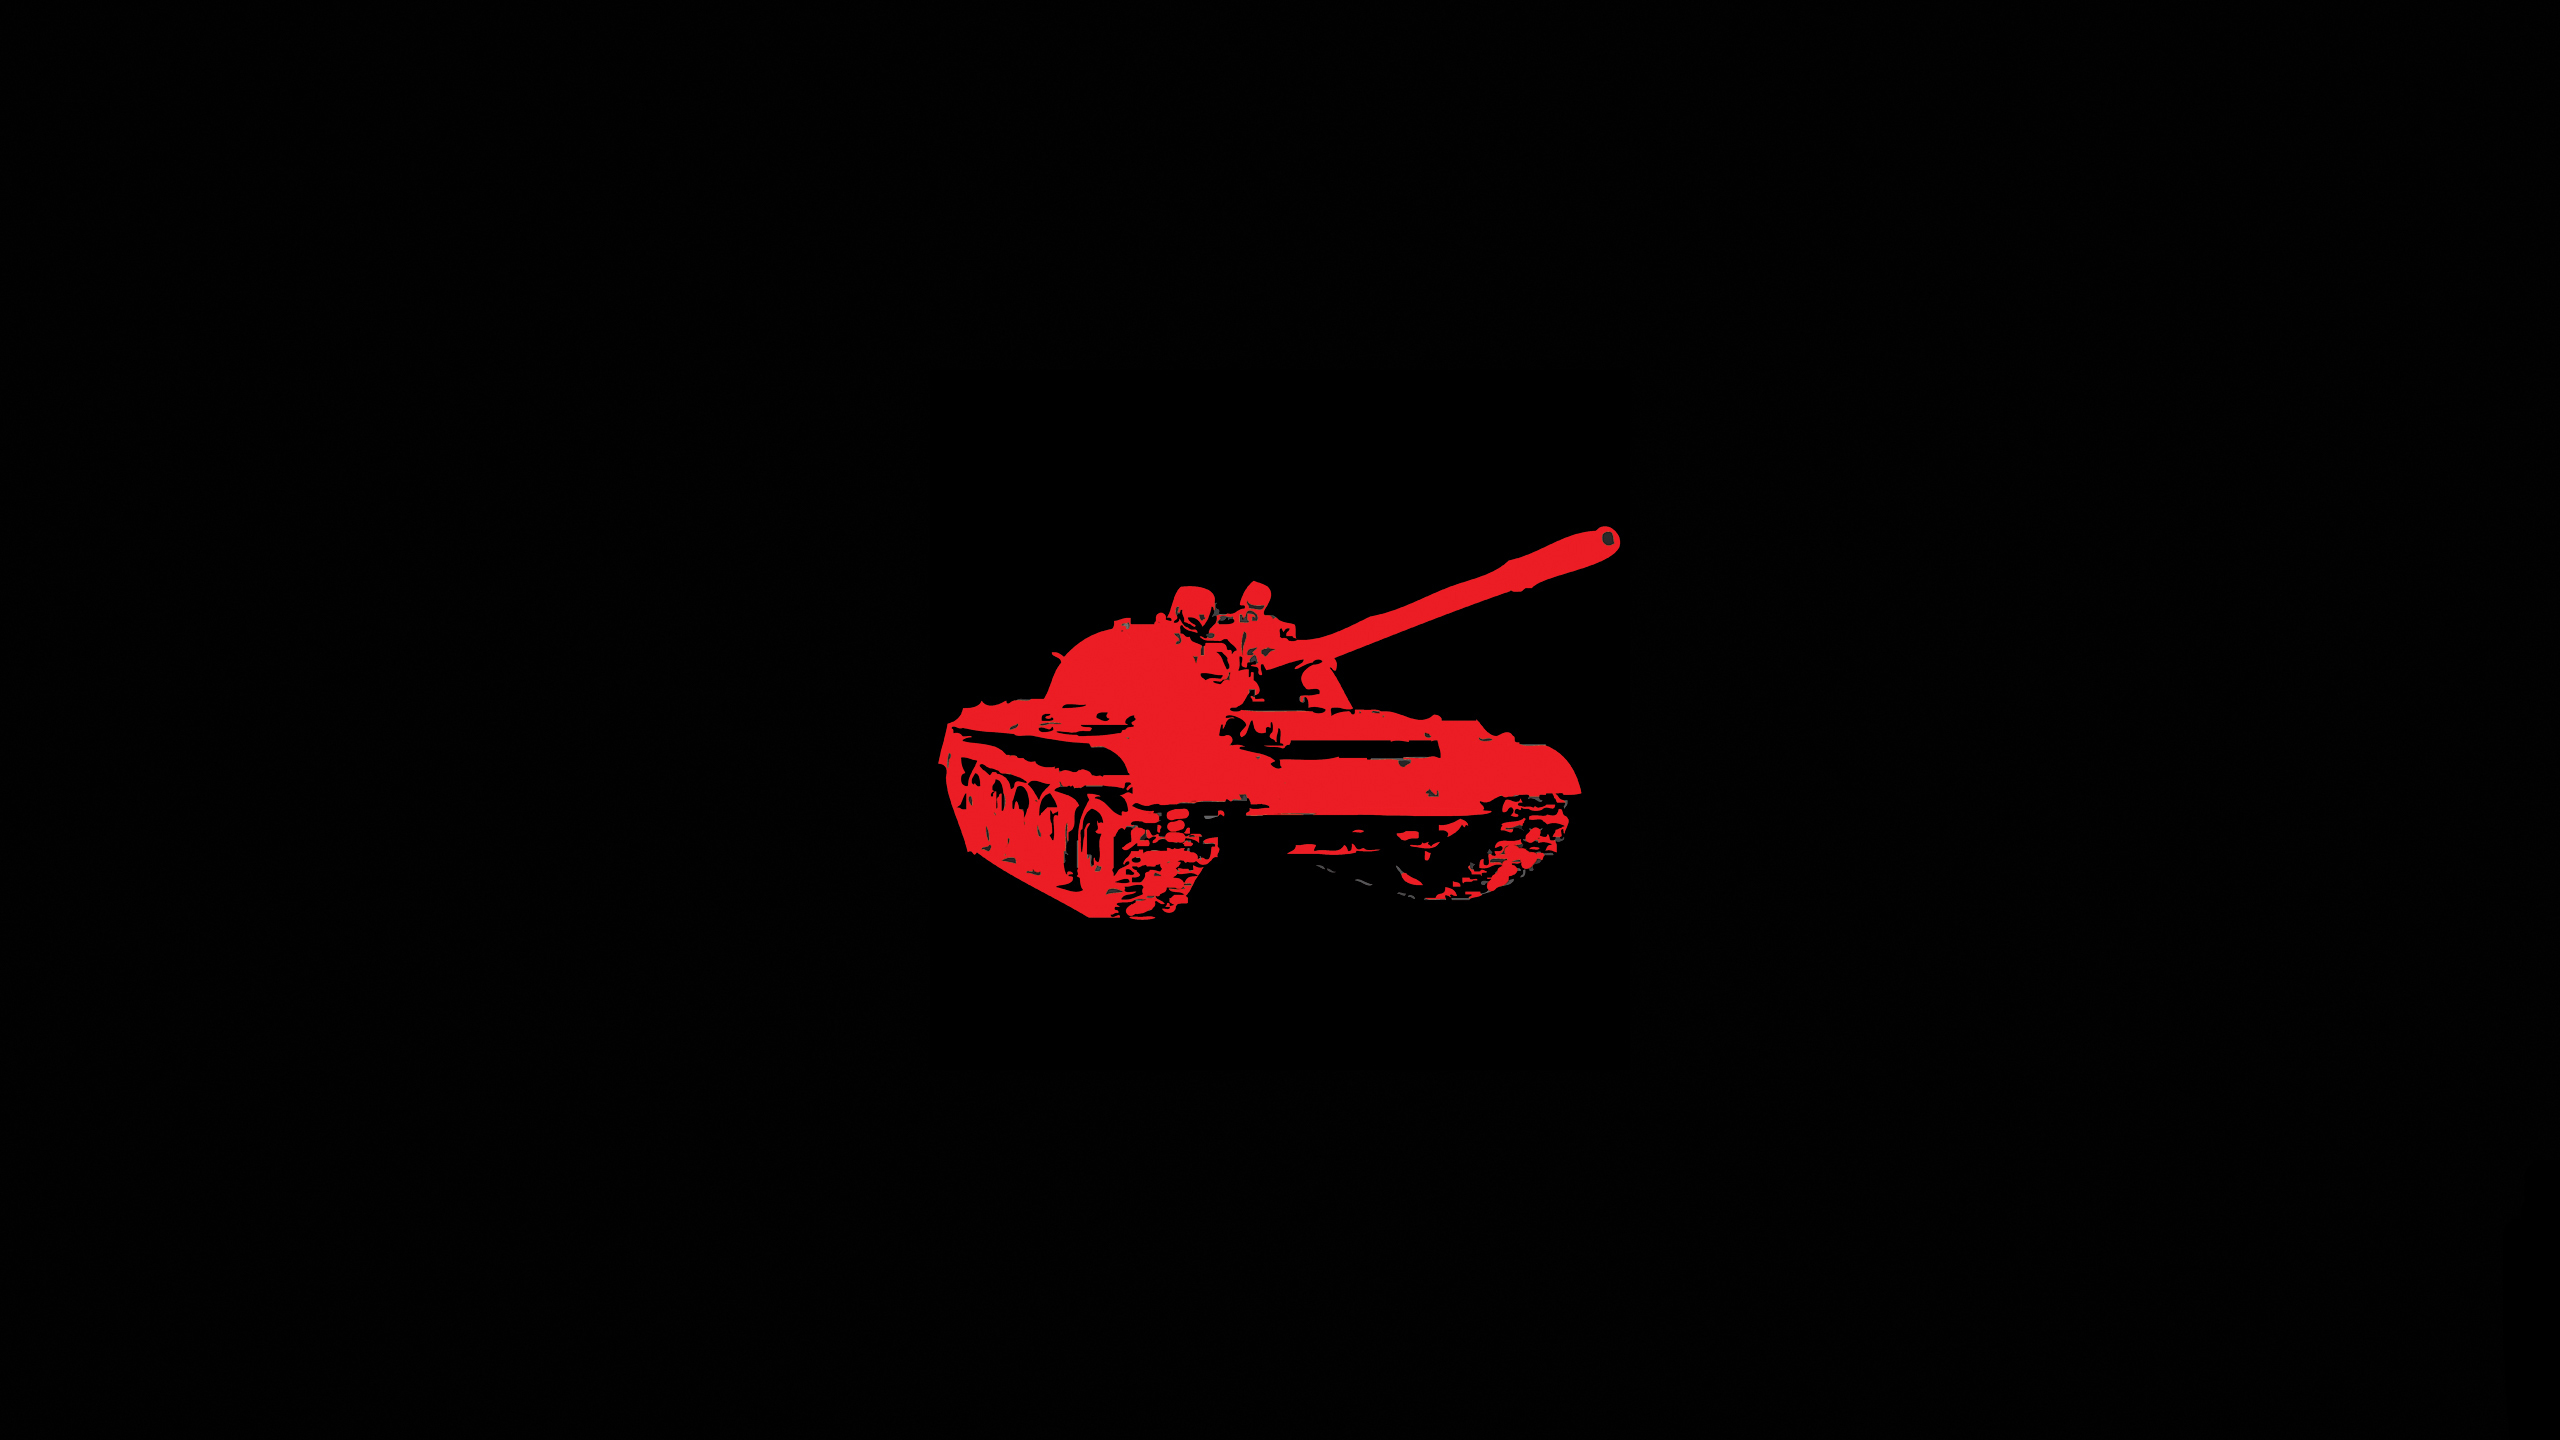 https://img.goodfon.com/original/2560x1440/a/6b/tank-sssr-red-krasnyy.jpg